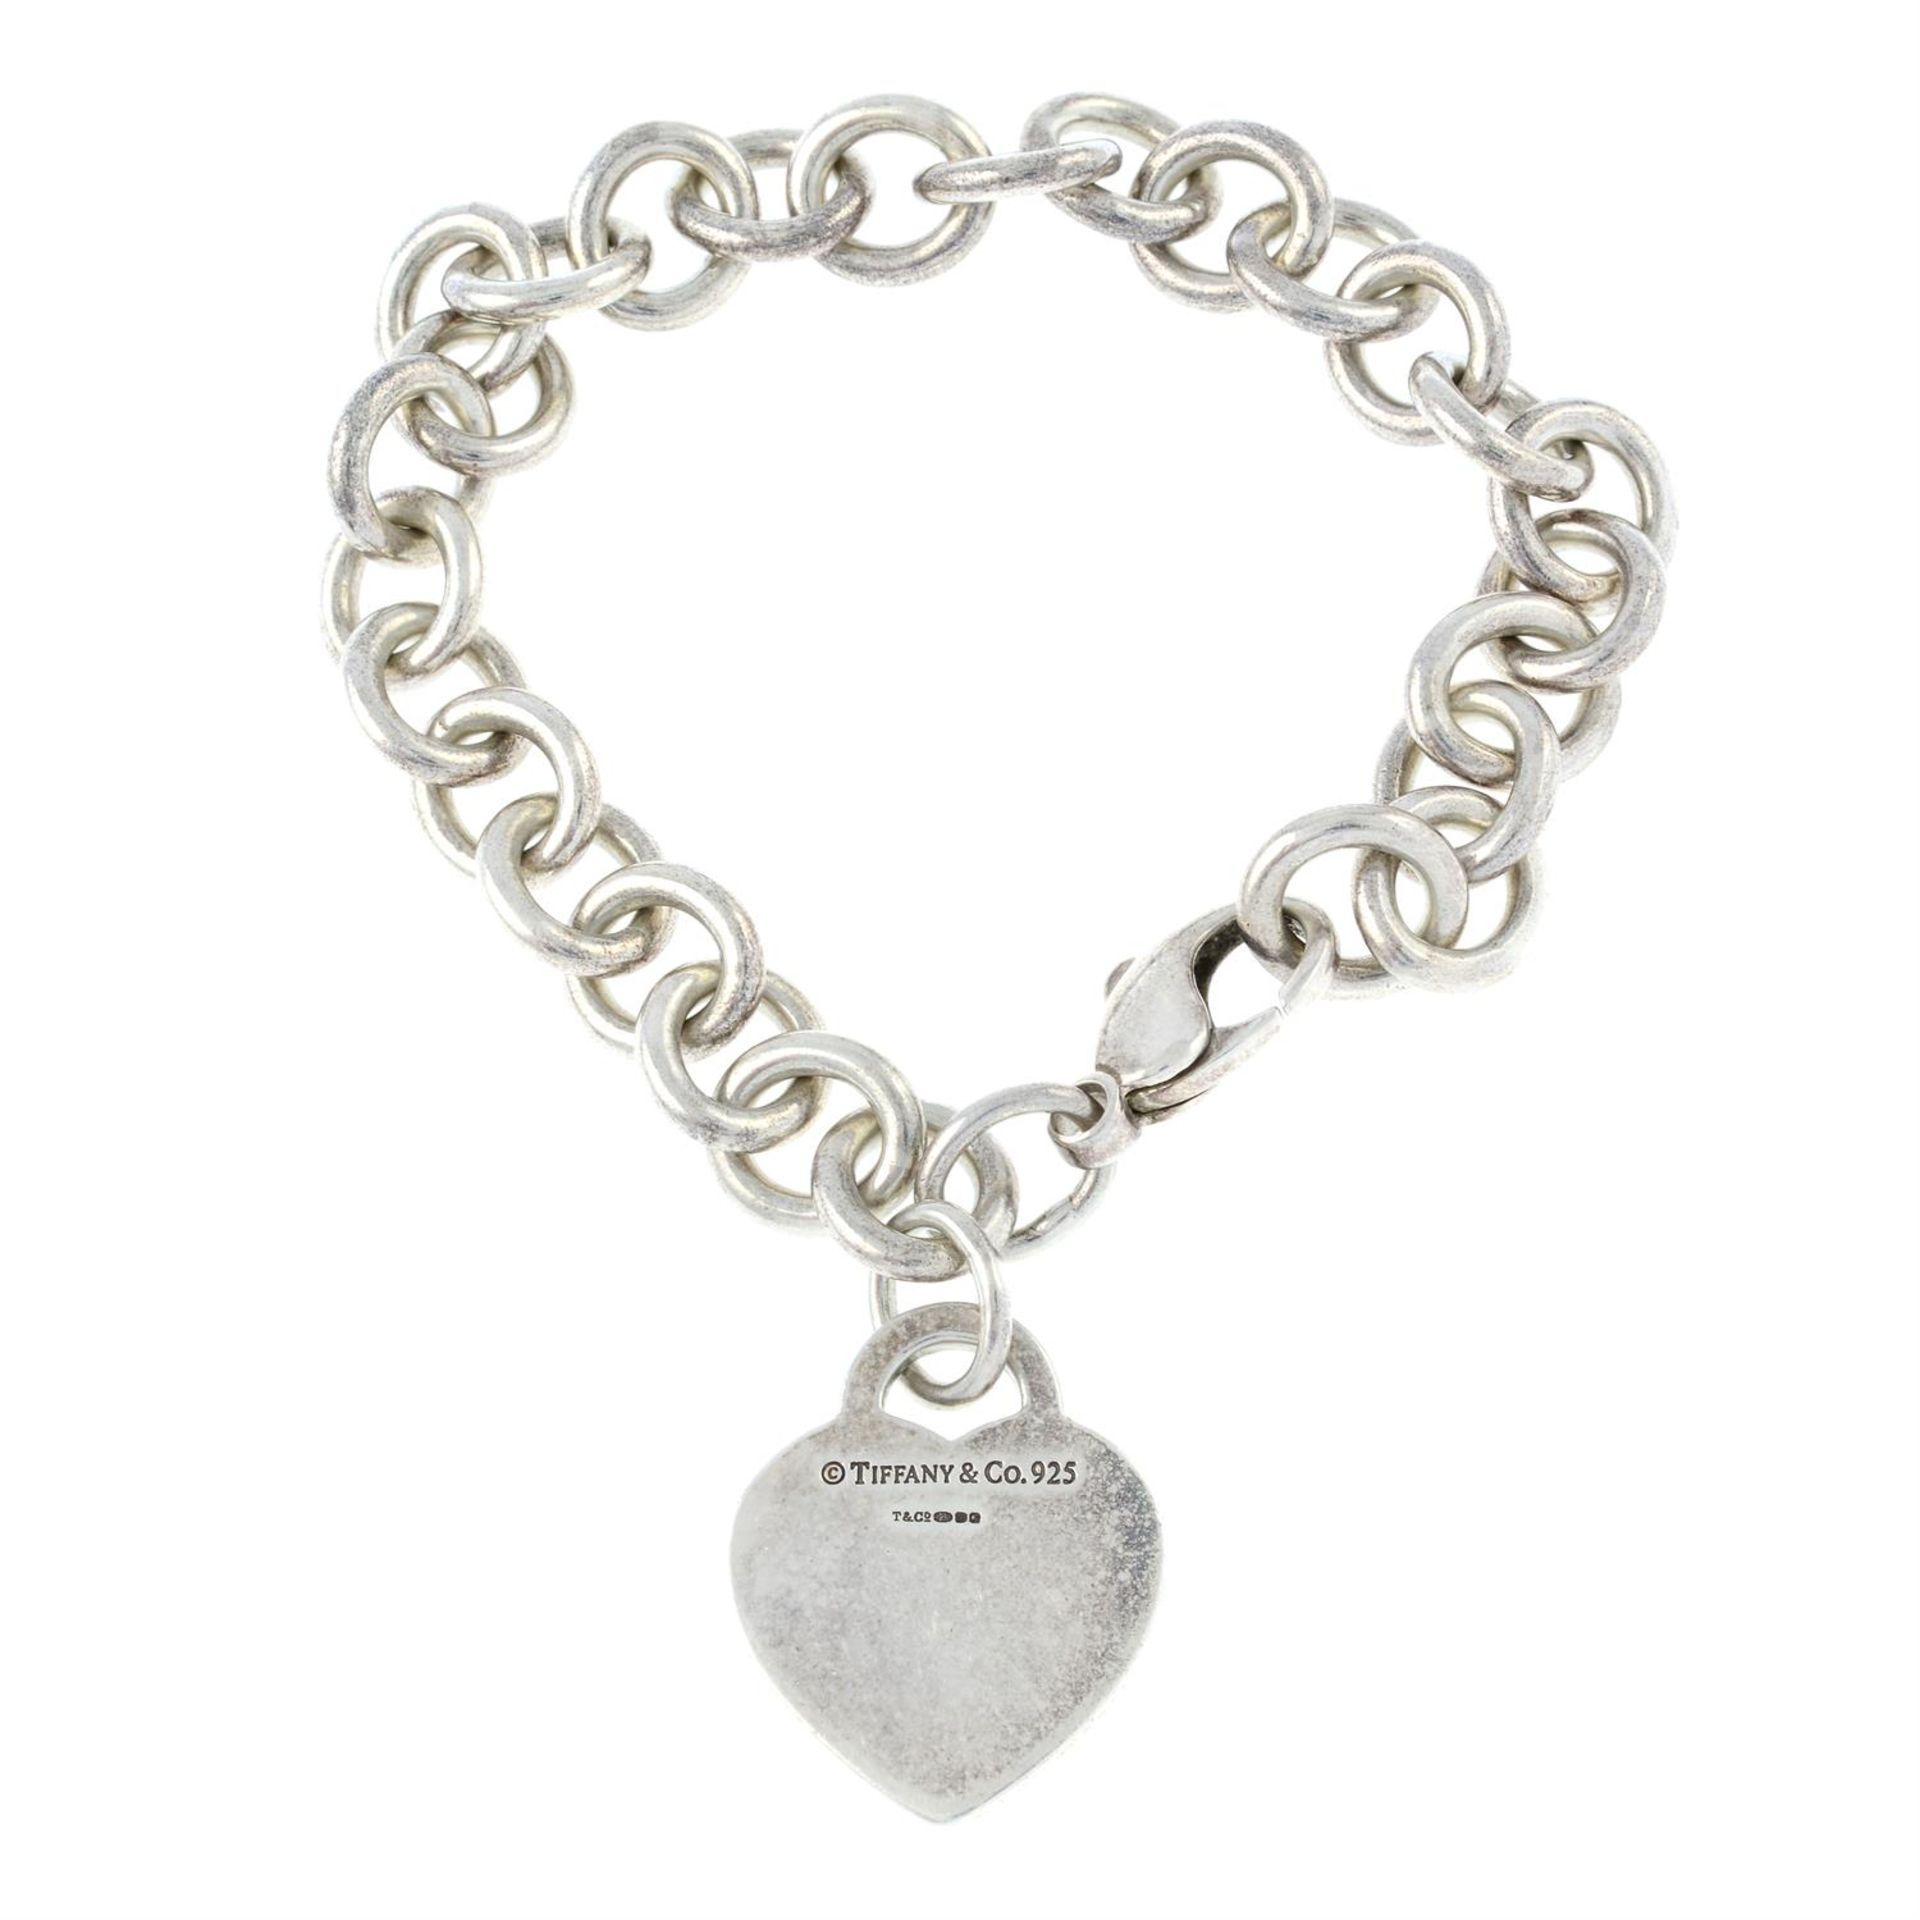 A silver 'Return to Tiffany' heart-shape tag bracelet, by Tiffany & Co. - Image 2 of 2